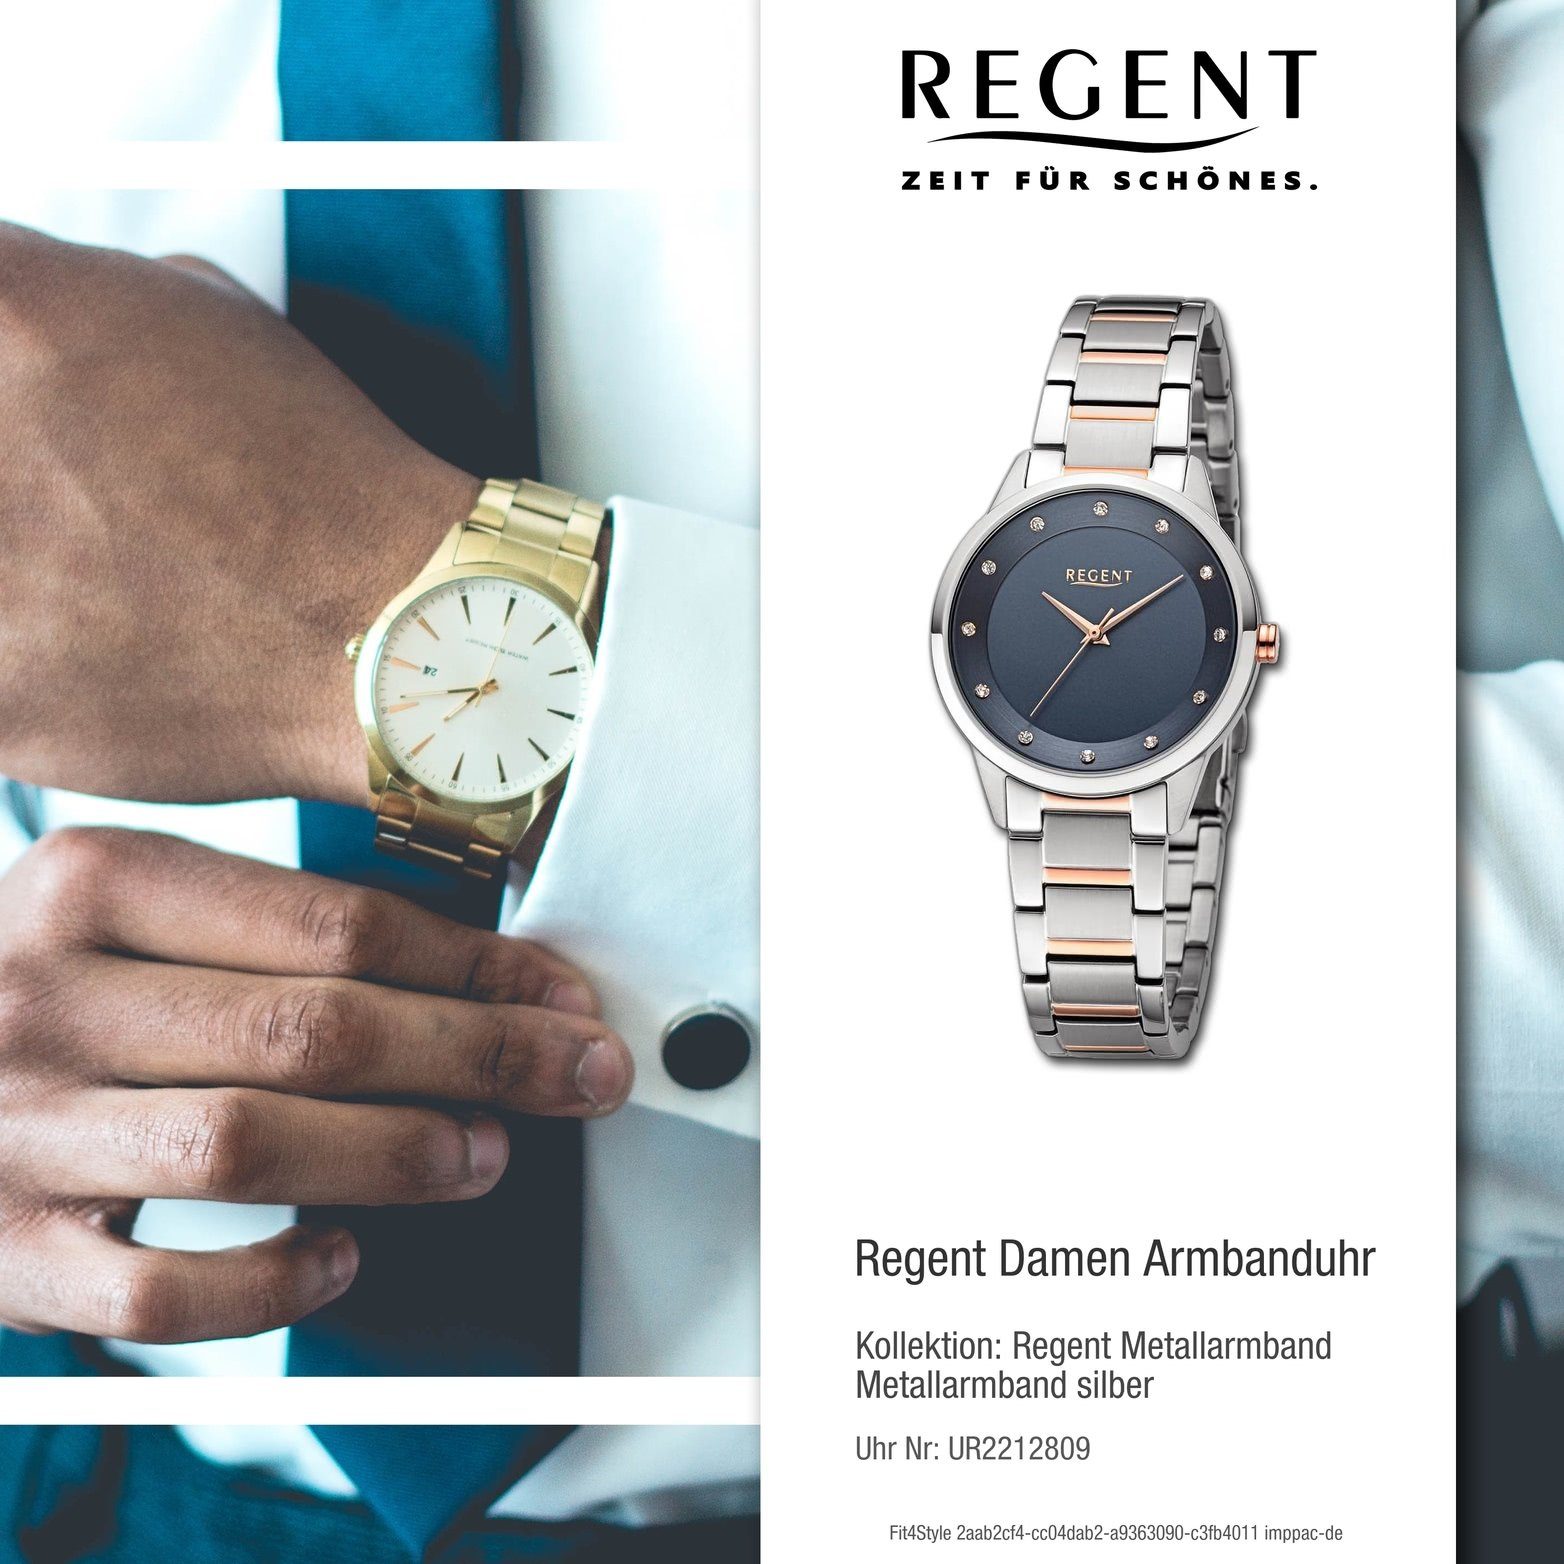 silber, Damen Regent (33mm) groß Analog, rosegold, rundes Quarzuhr Damenuhr Gehäuse, Metallarmband Armbanduhr Regent